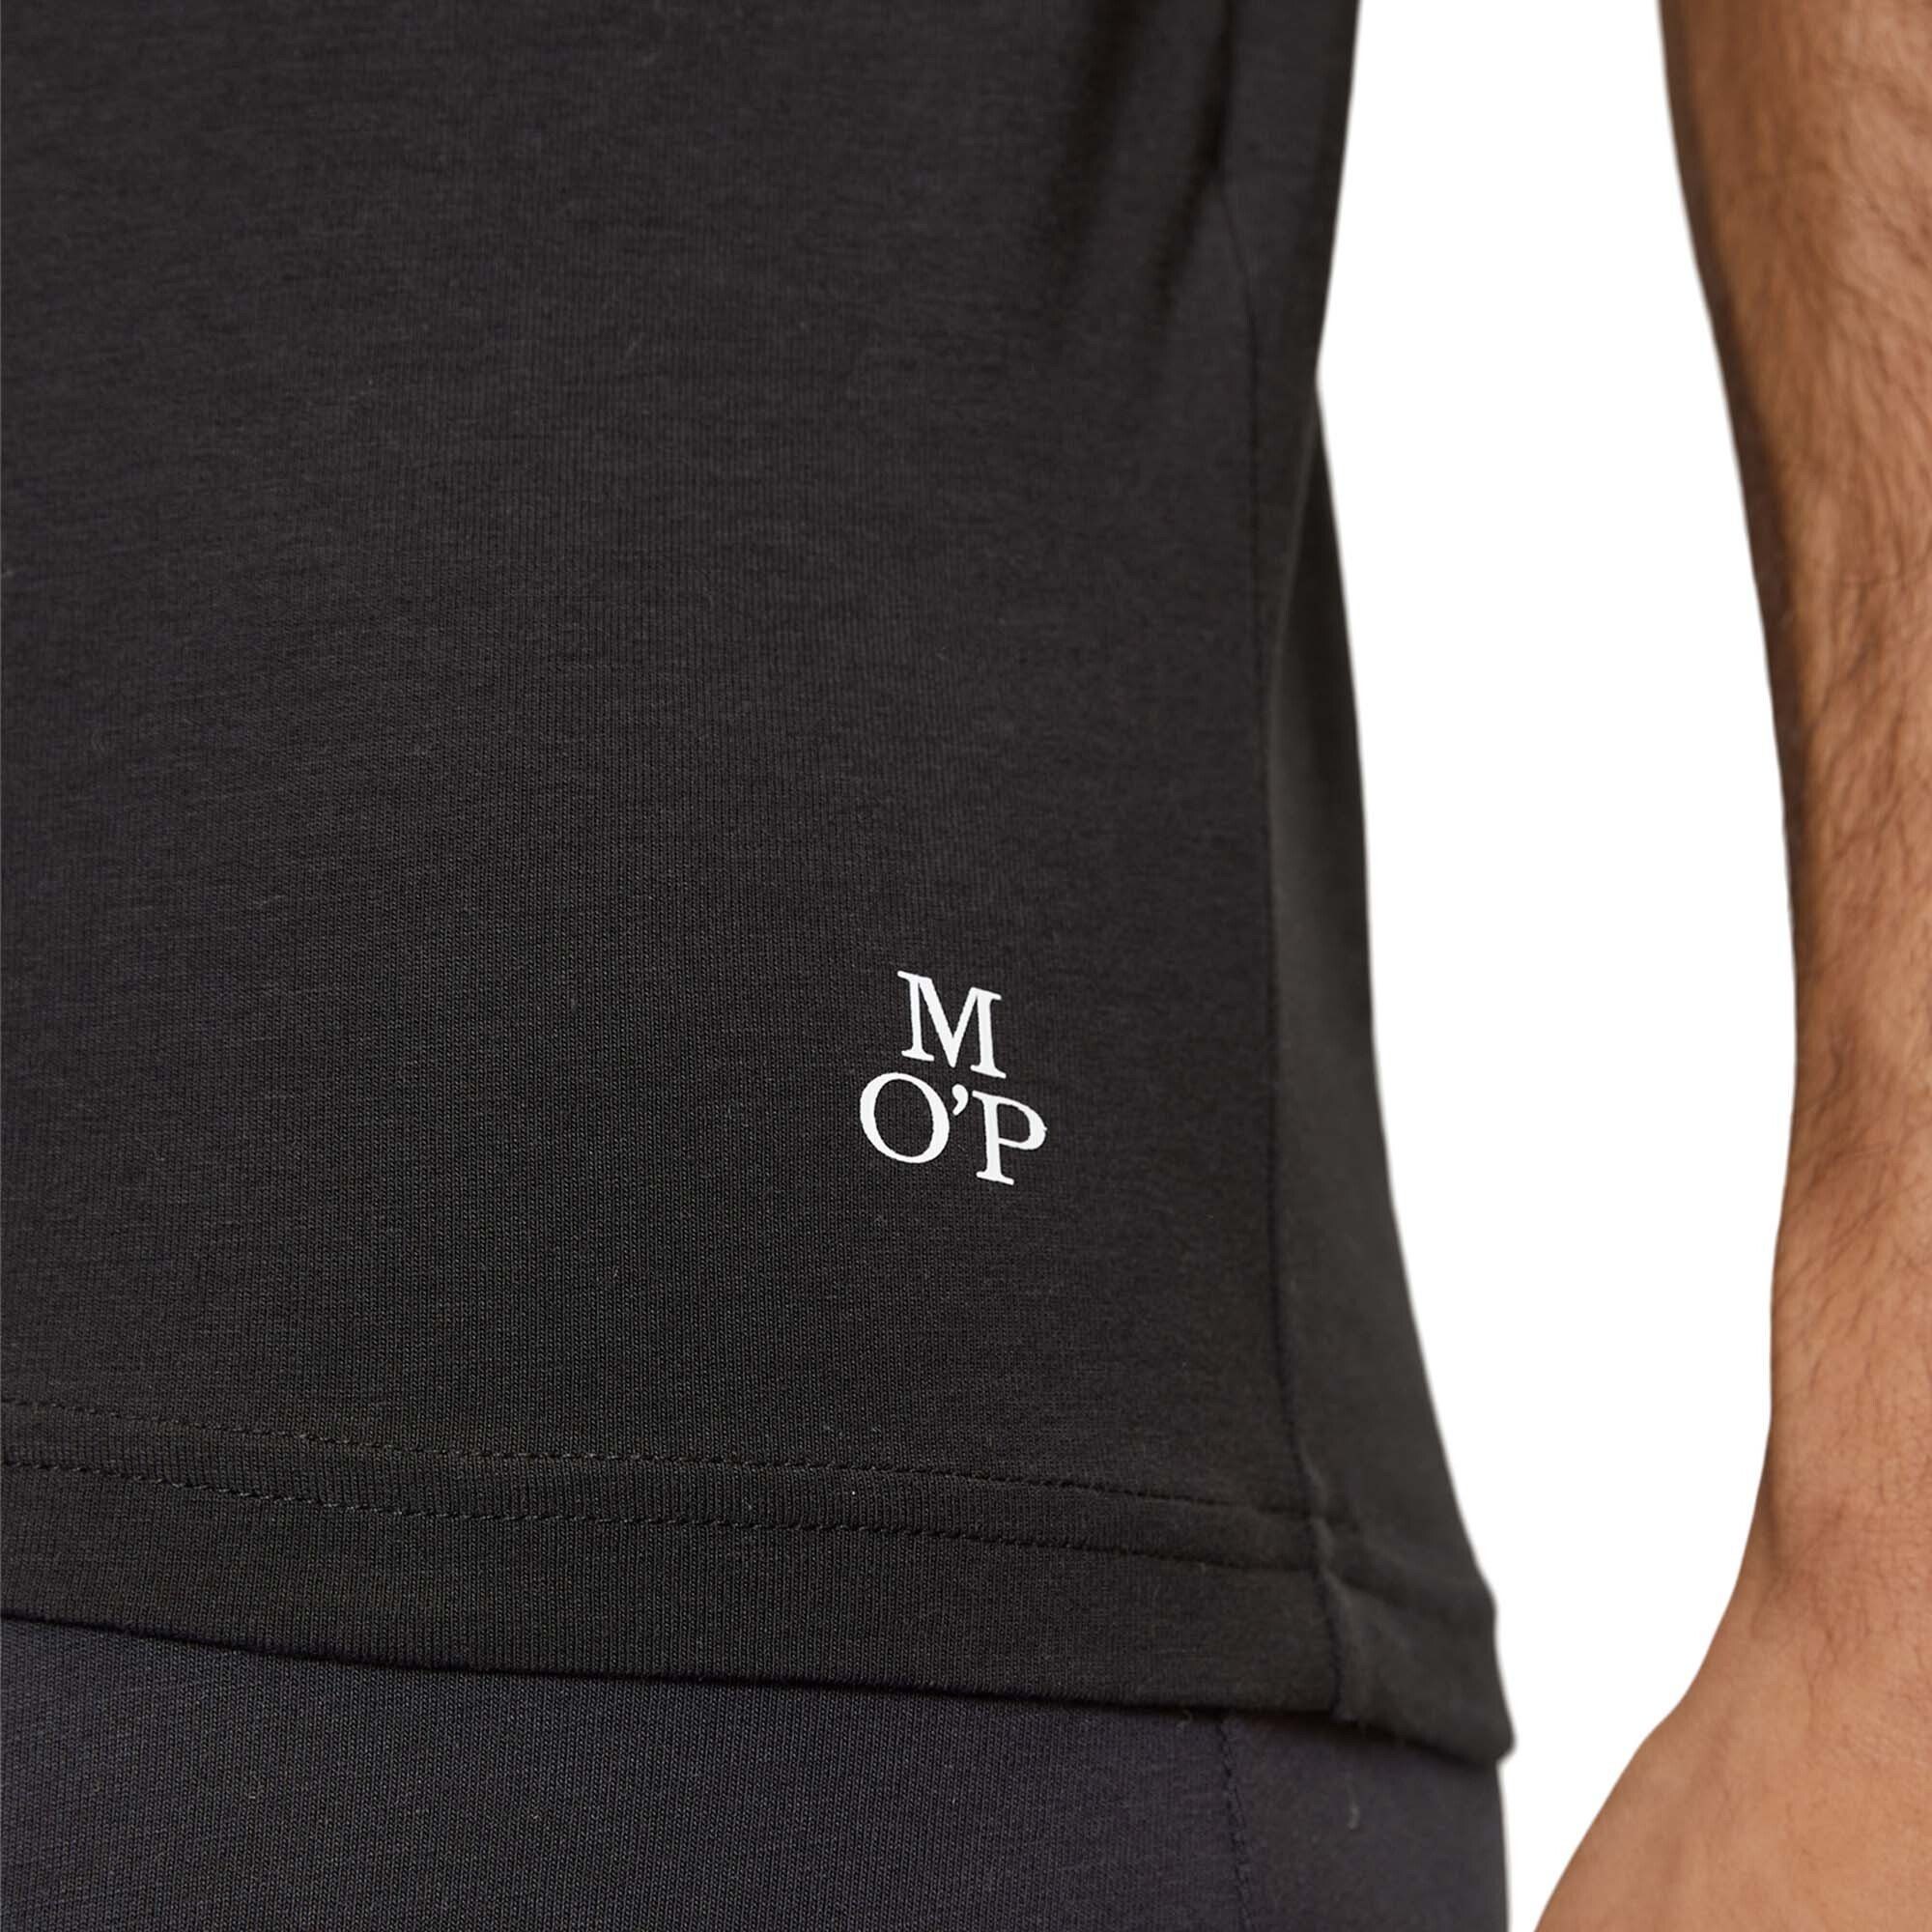 Marc O'Polo T-Shirt Organic Shirt, Herren Schwarz - 3er Pack T-Shirt, V-Neck